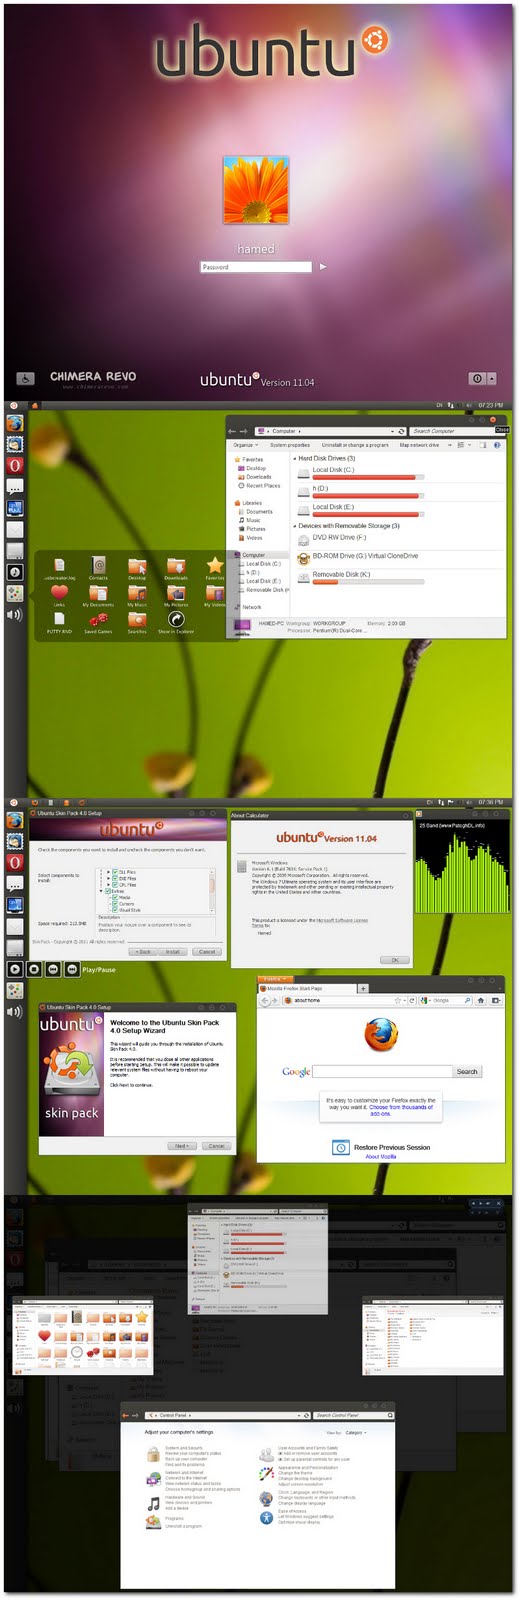 ubuntu_skin_pack_4_0_windows_7_by